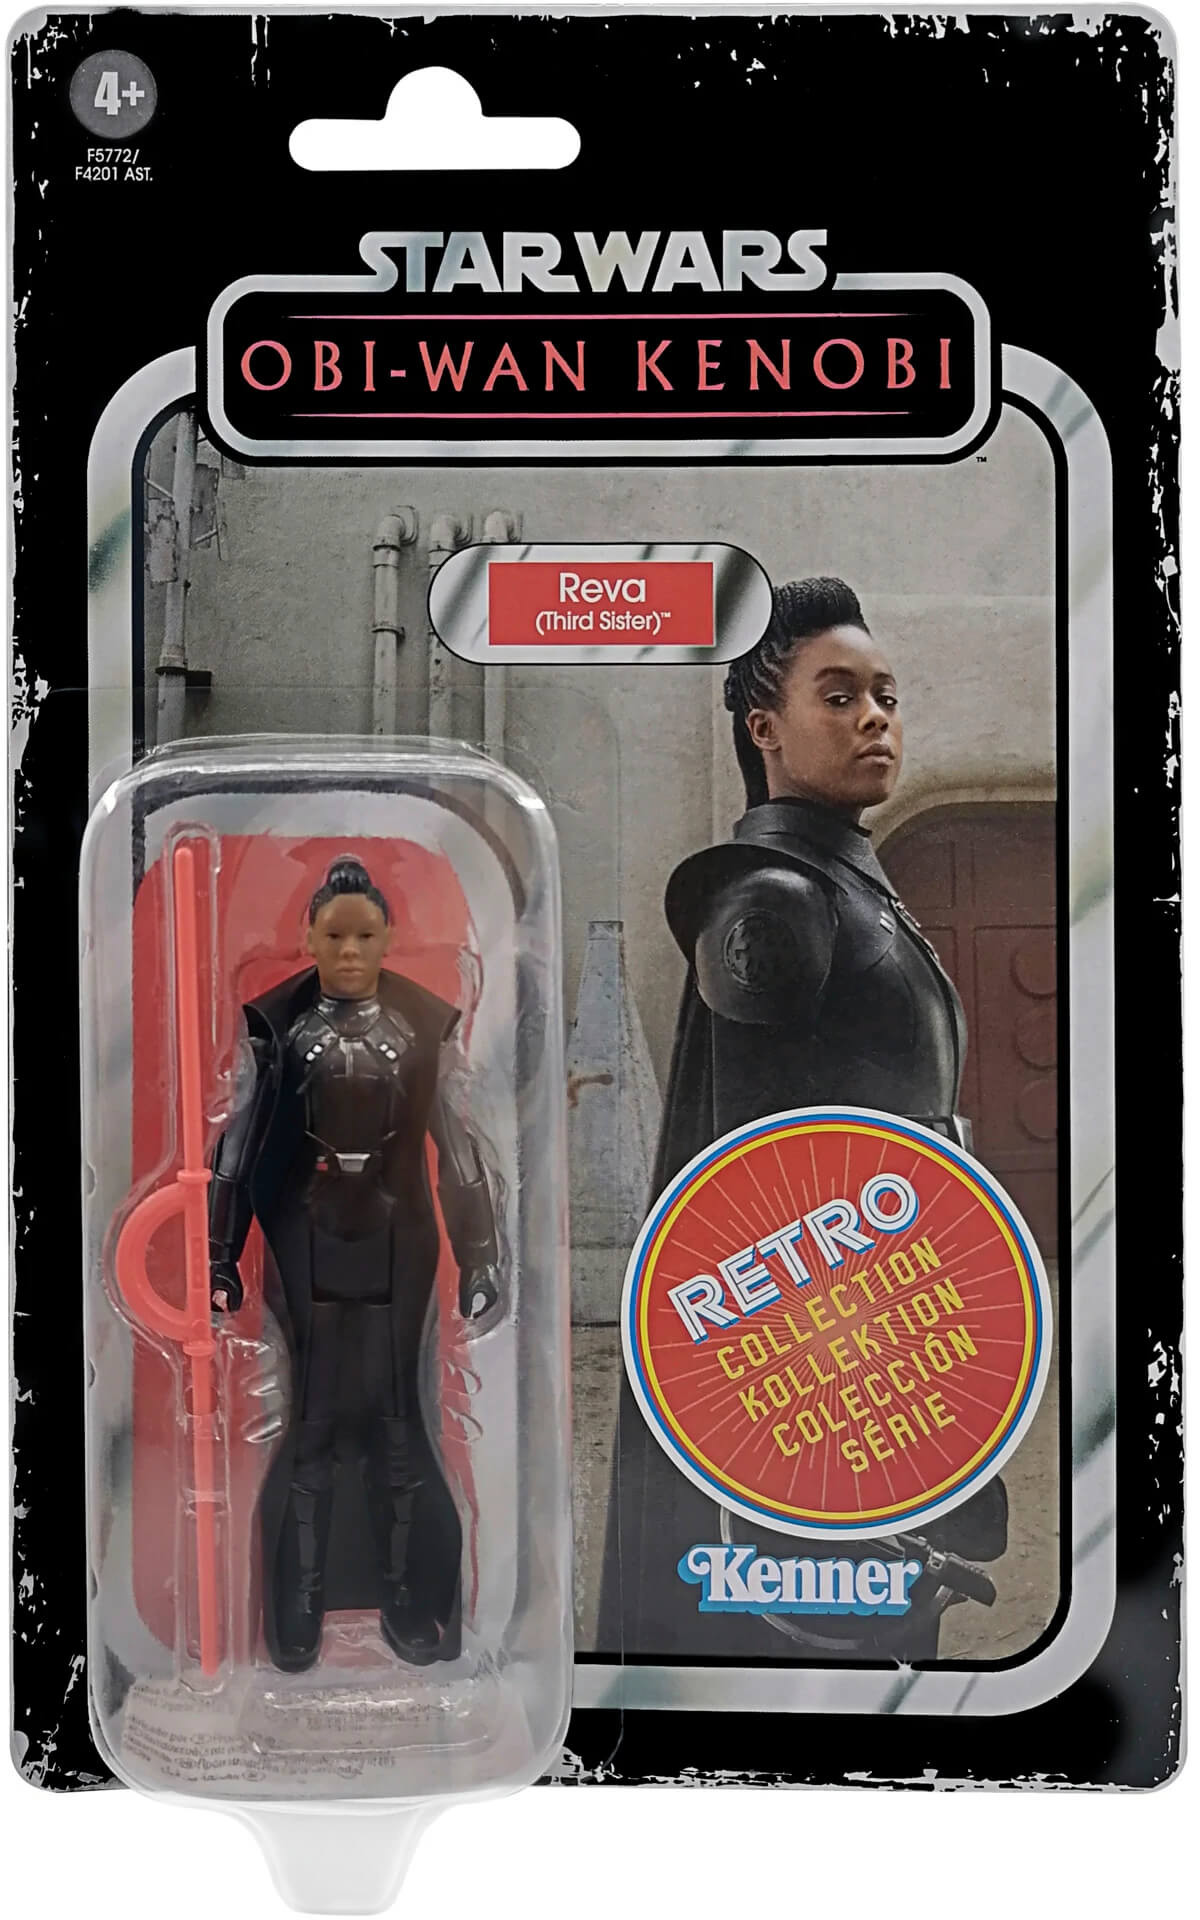 Star Wars The Retro Collection - Reva